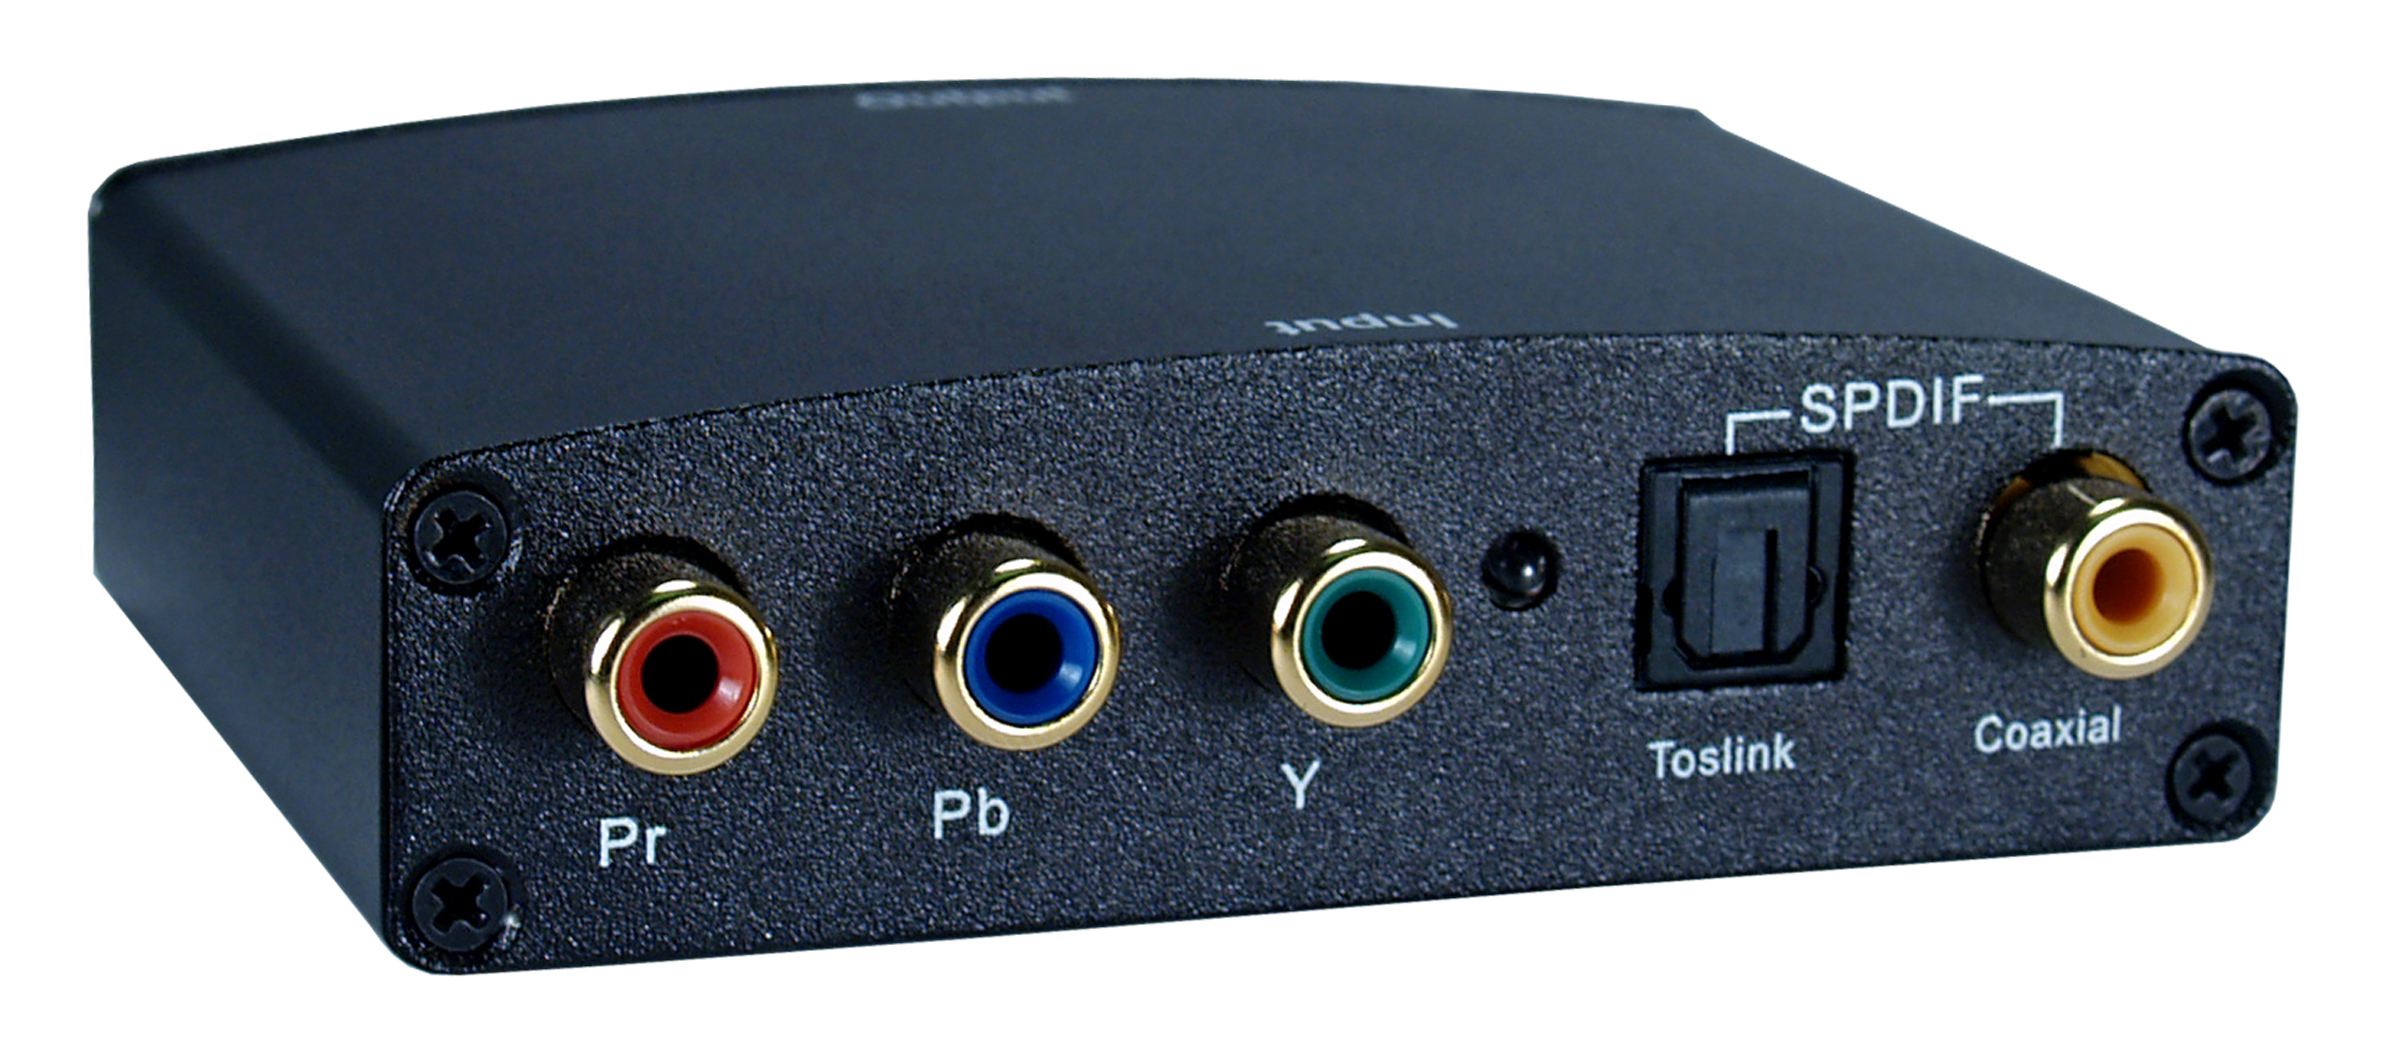 Component Video & SPDIF Toslink Audio to Digital Converter